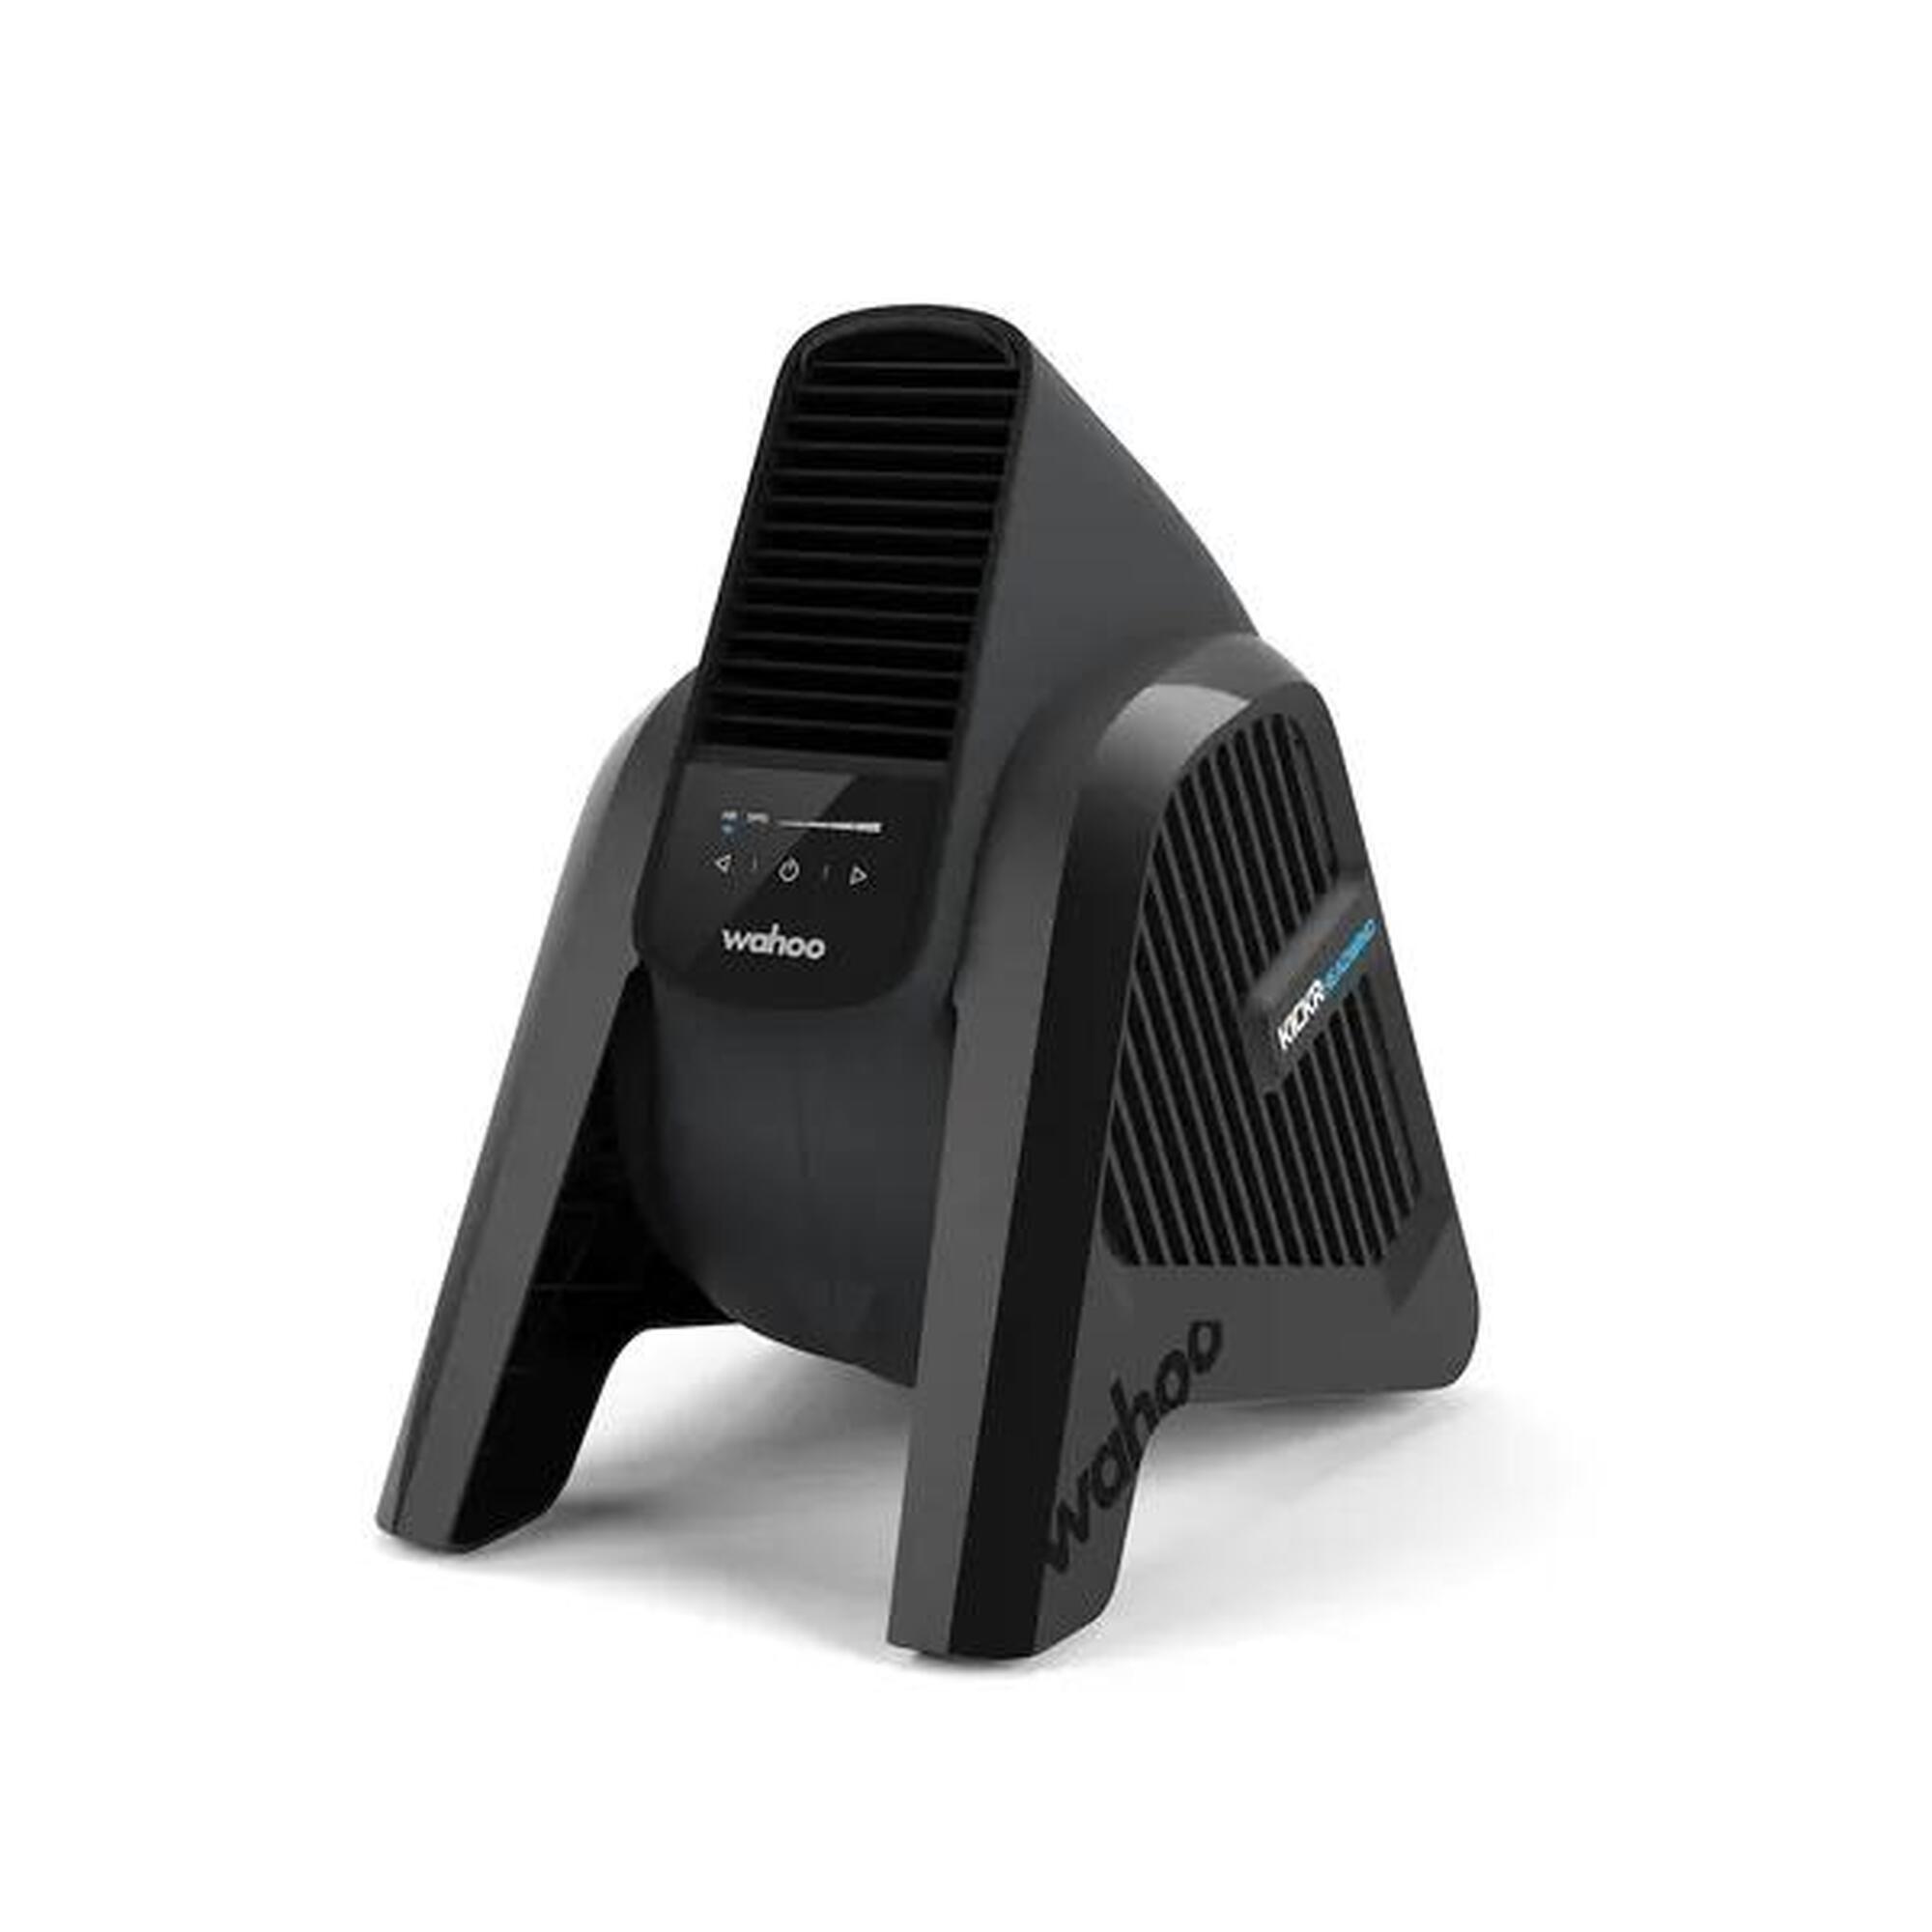 KICKR HEADWIND Sensor Controlled Bluetooth Cycling Fan (UK Plug) - Black